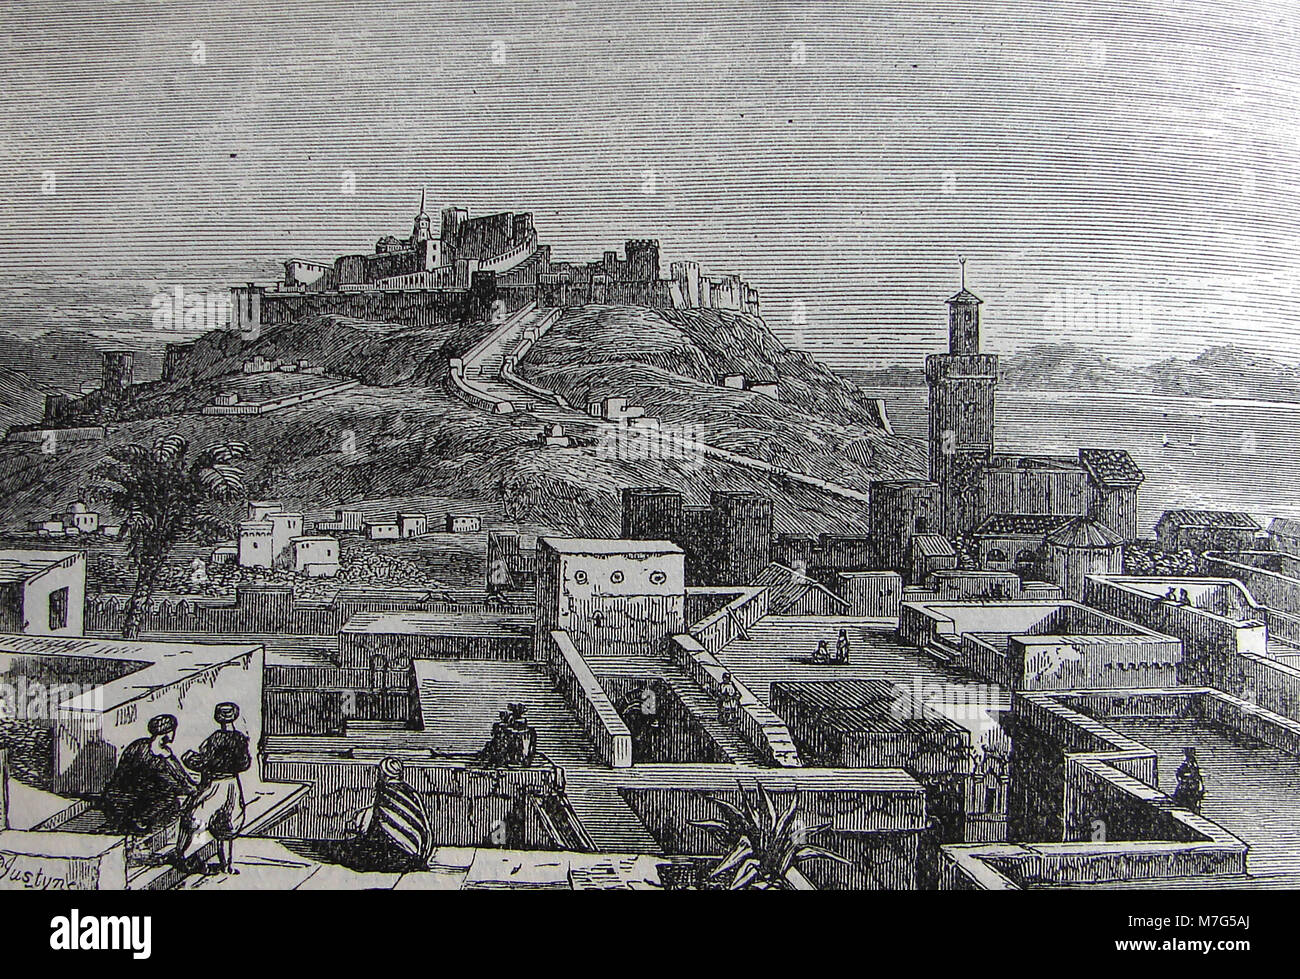 1900 - vue de Tanger, Maroc Banque D'Images